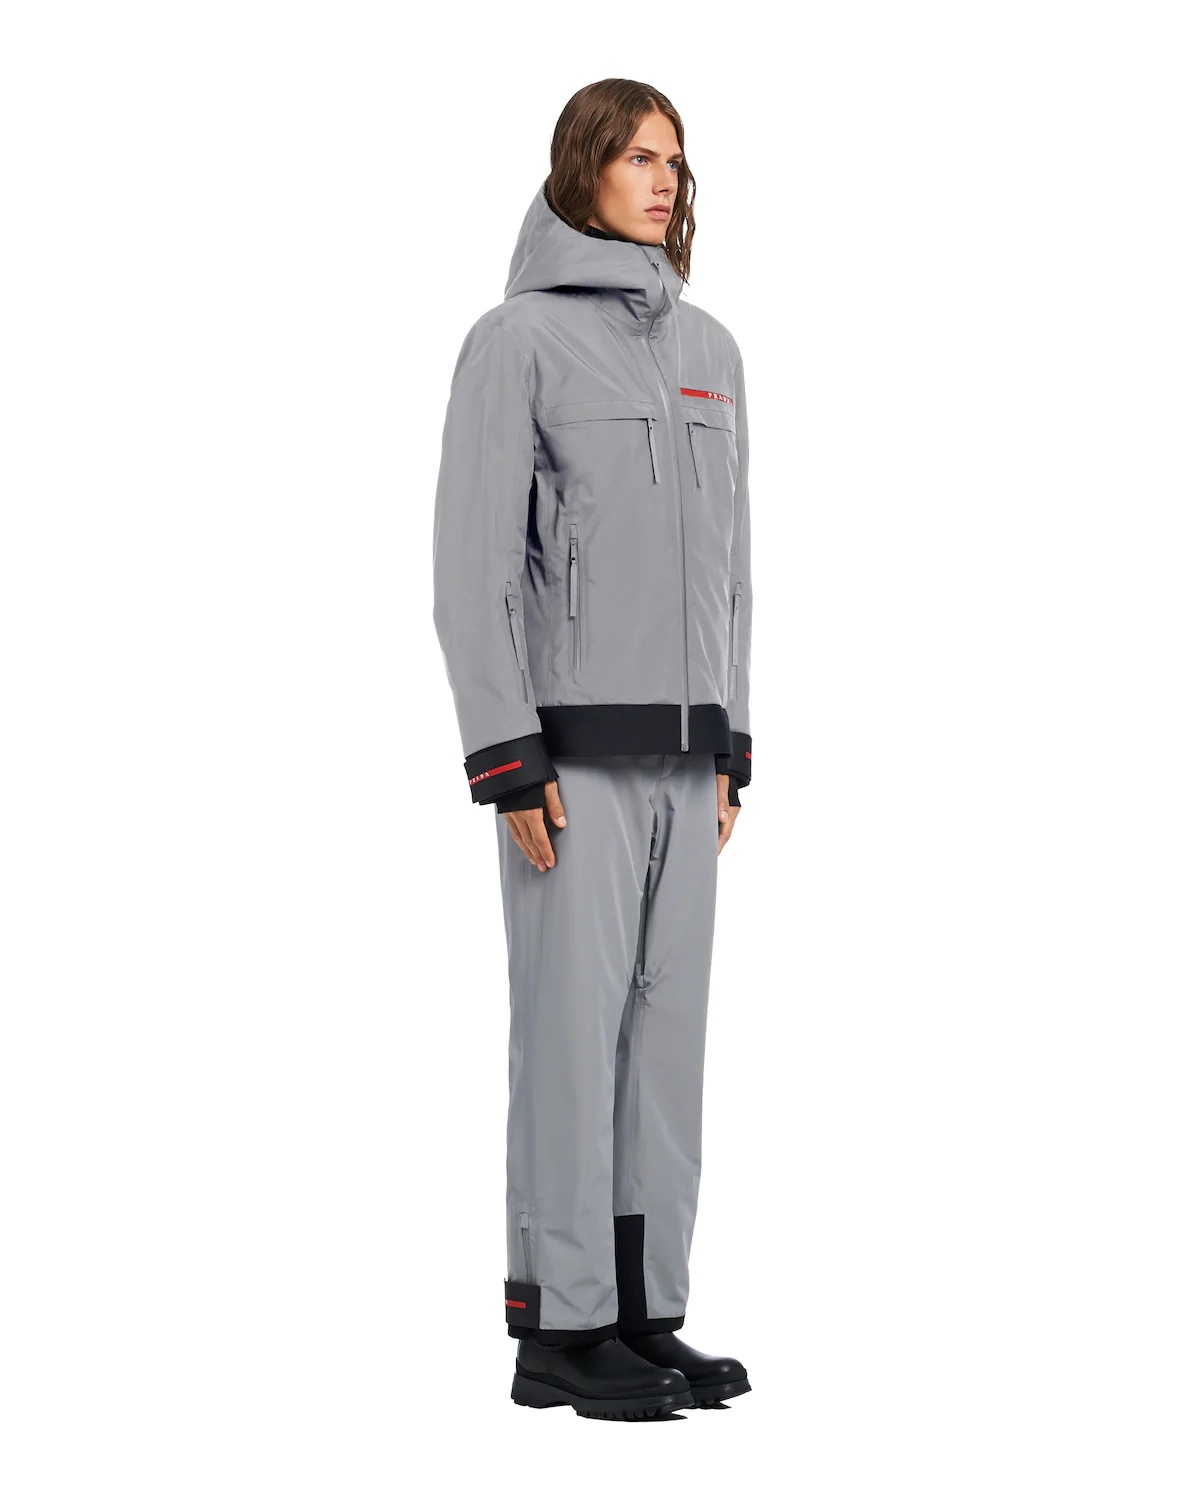 GORE-TEX ski jacket - 4